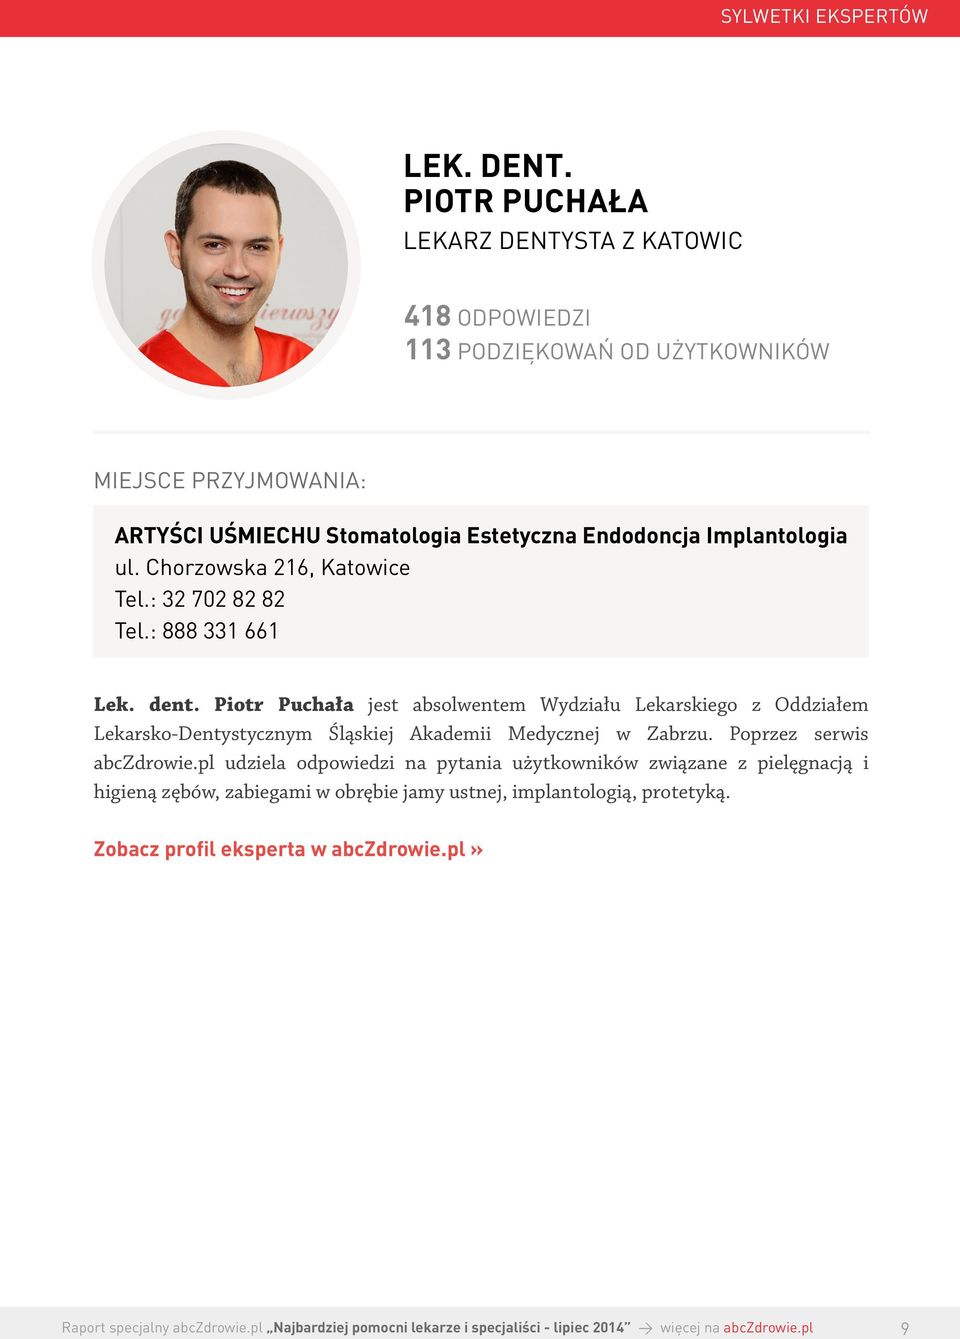 Estetyczna Endodoncja Implantologia ul. Chorzowska 216, Katowice Tel.: 32 702 82 82 Tel.: 888 331 661 Lek. dent.